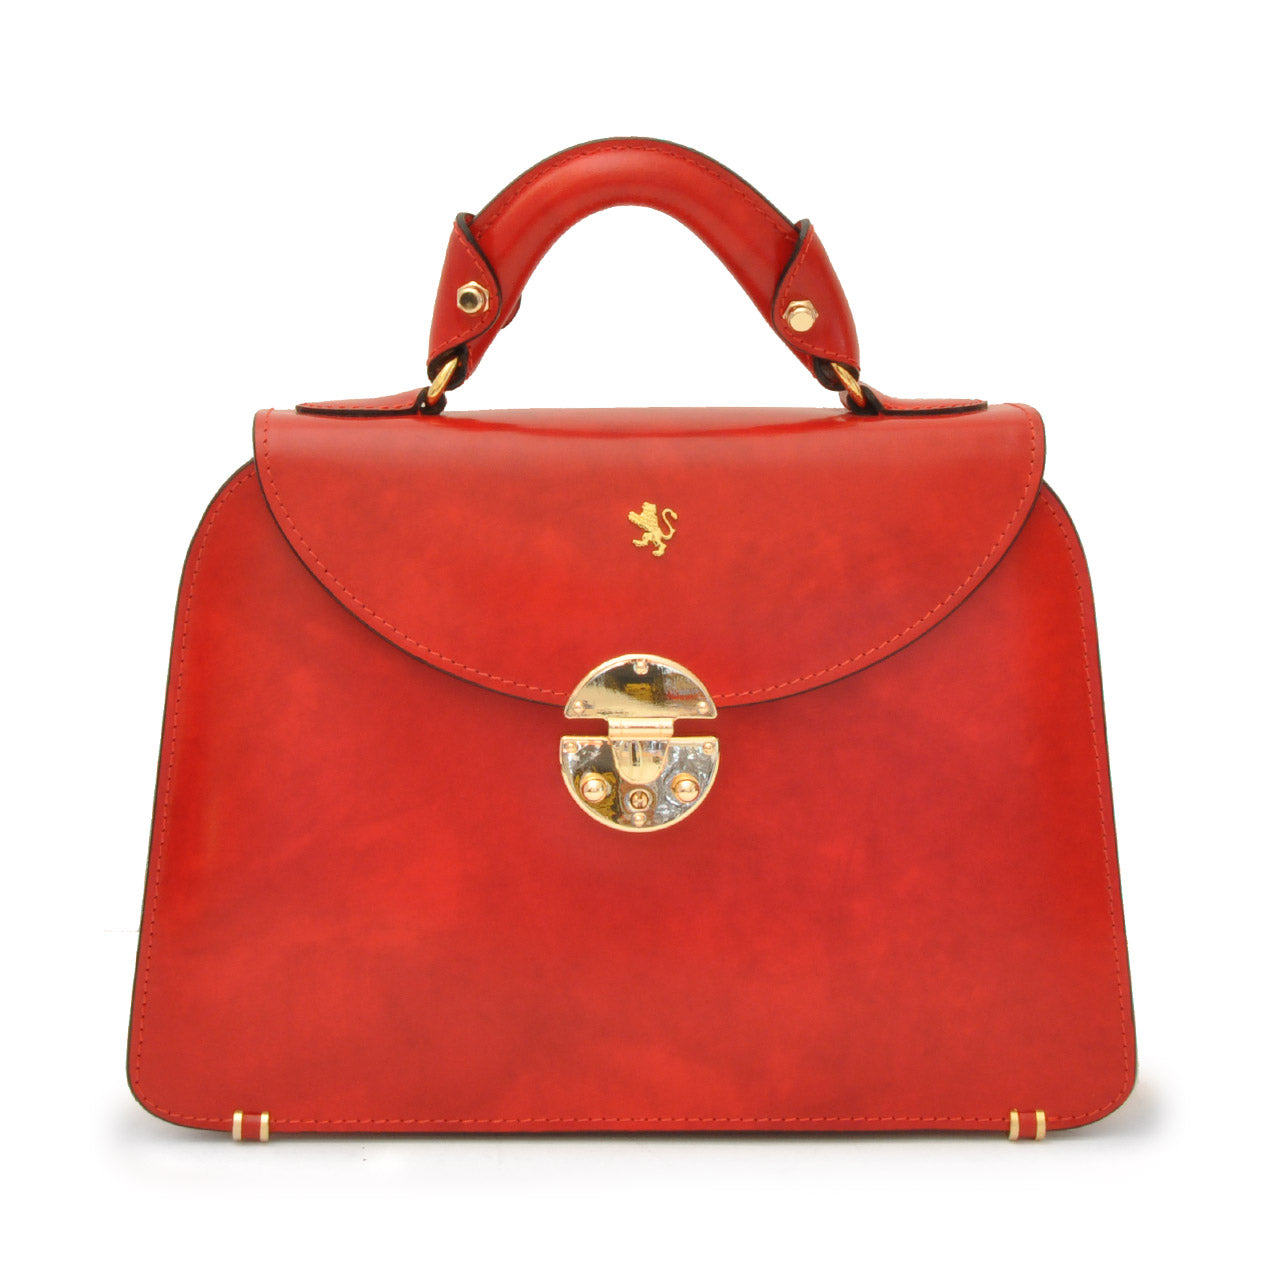 Pratesi Veneziano Small Lady Bag in genuine Italian leather